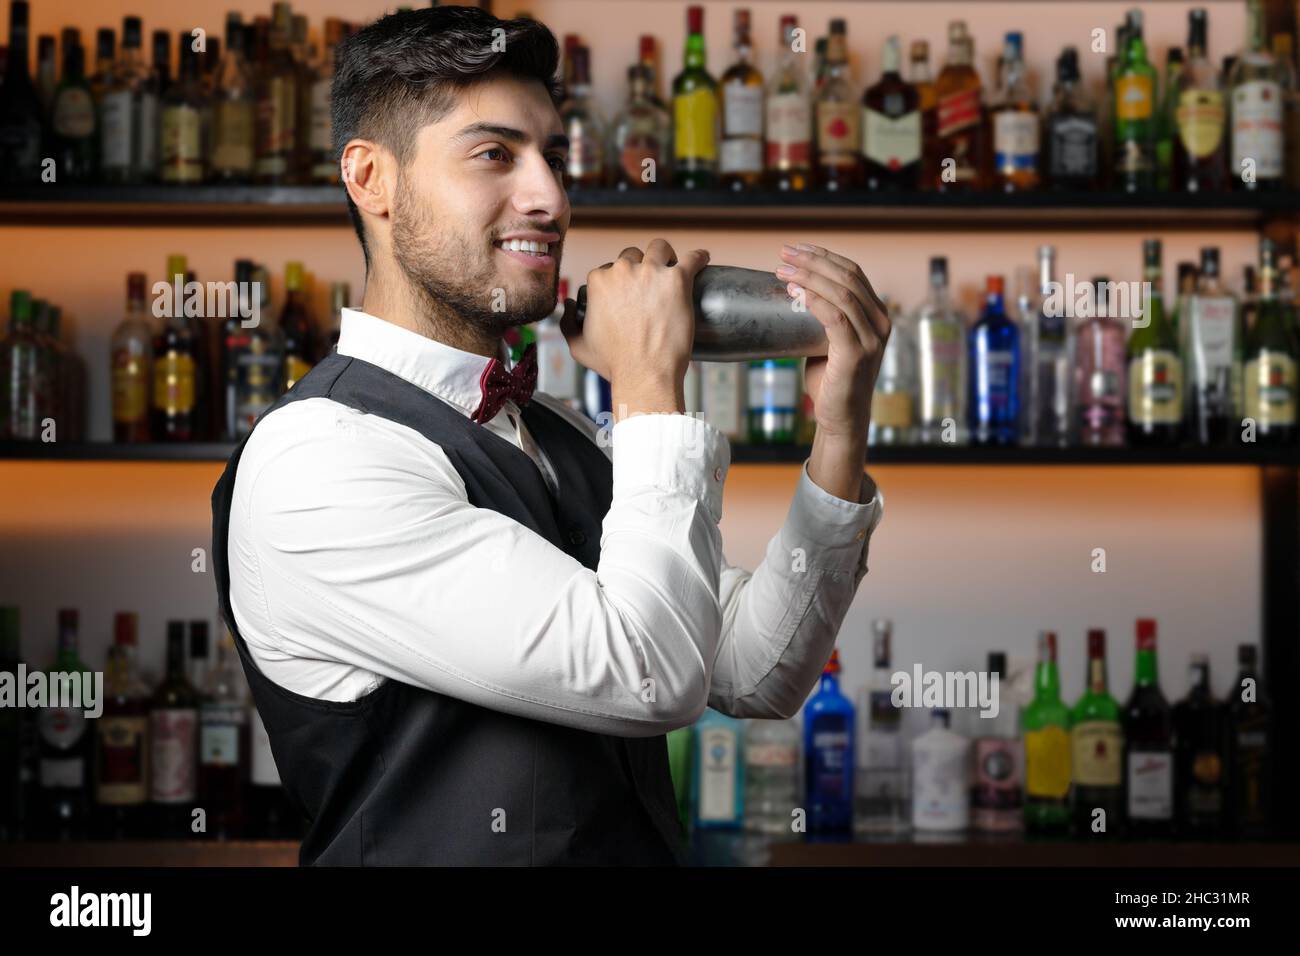 Давай бармен тащи пустой стакан песня. Макс Брадарский бармен. Турция 2016 год бармен красавец. Бармен во весь рост. Бармен мафия роль.